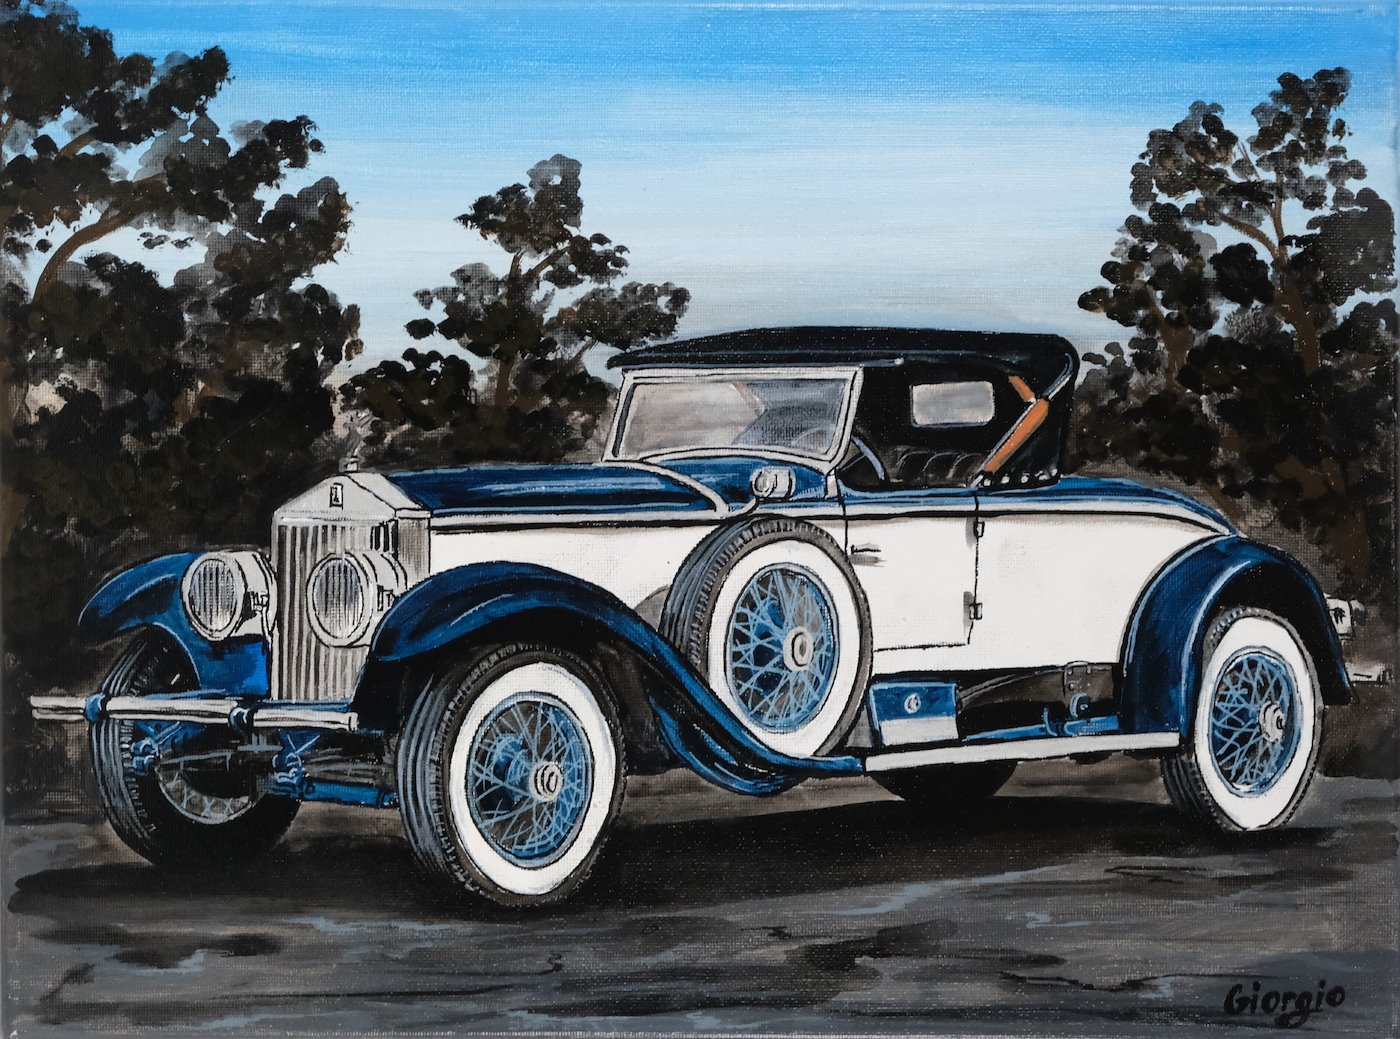 Giorgio - 1928 Rolls Royce Phantom Piccadilly